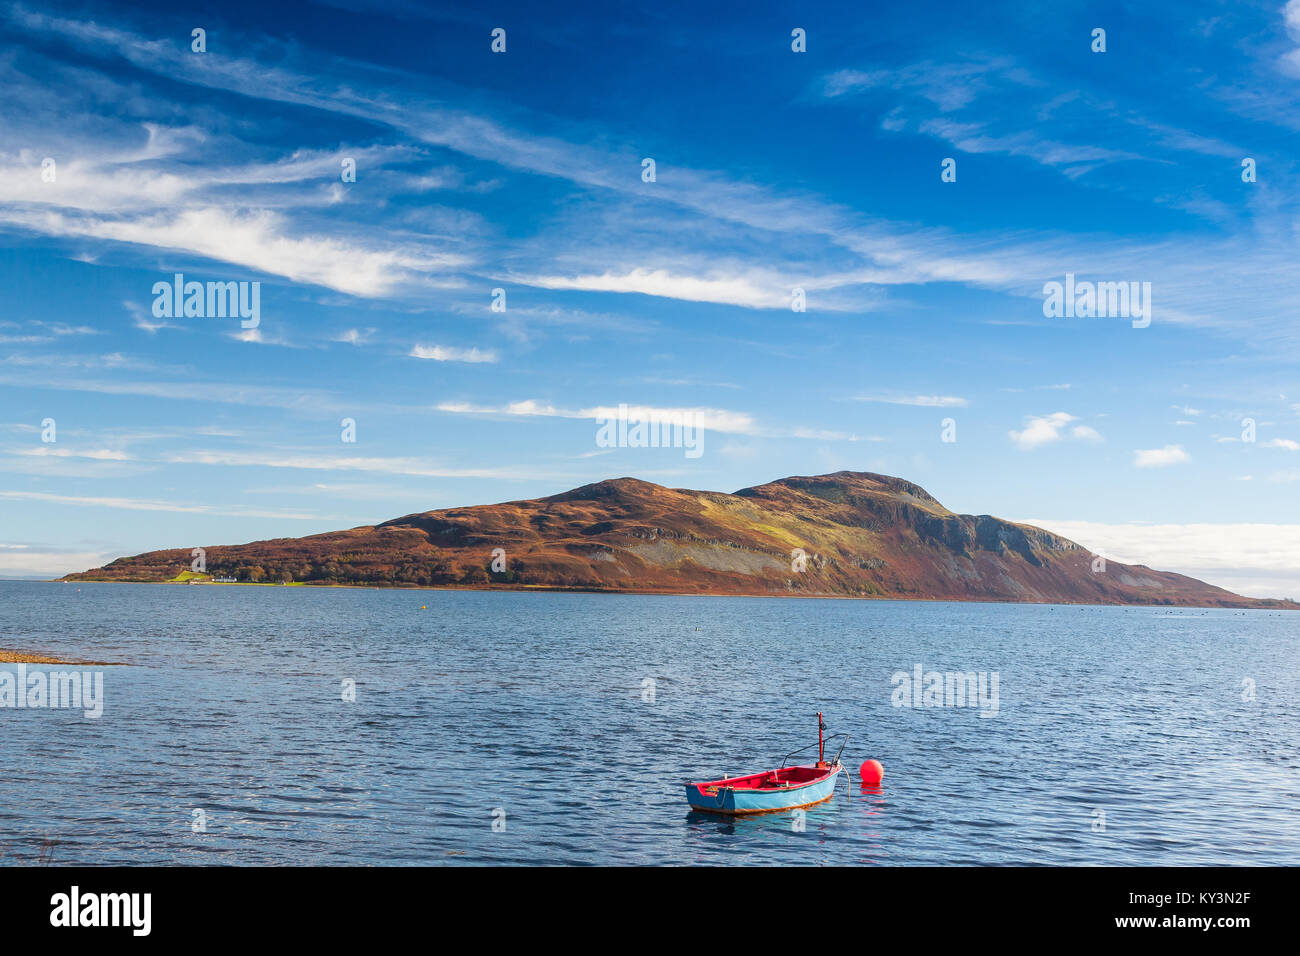 A view of Holy Isle from Lamlash bay, Isle of Arran, Scotland Stock Photo